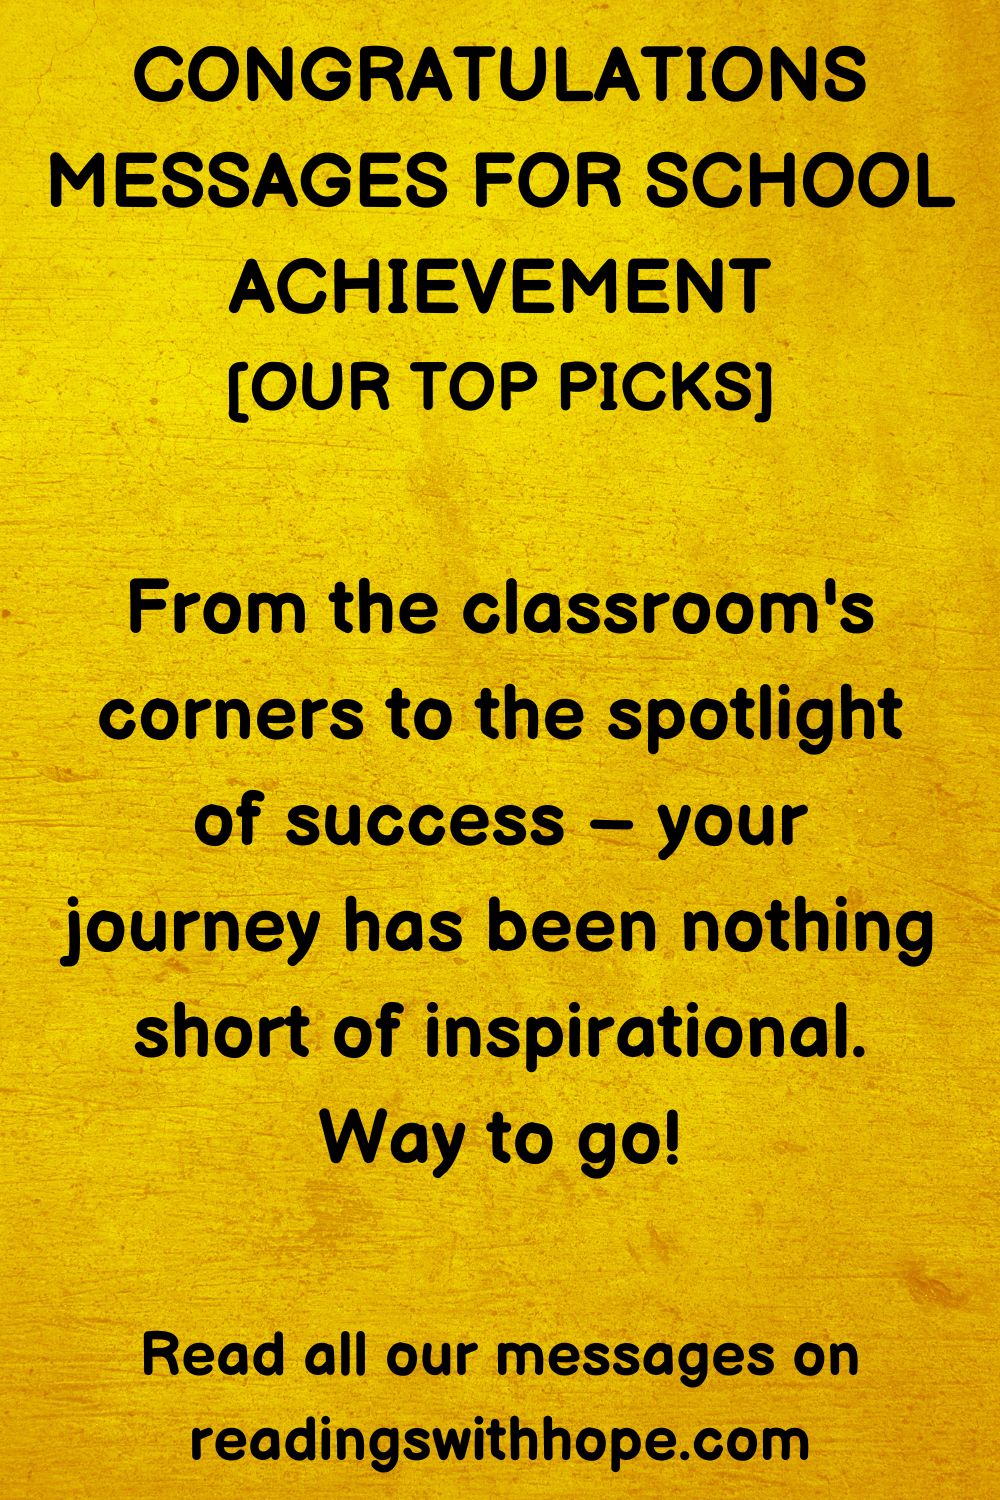 Congratulations Message for School Achievement
